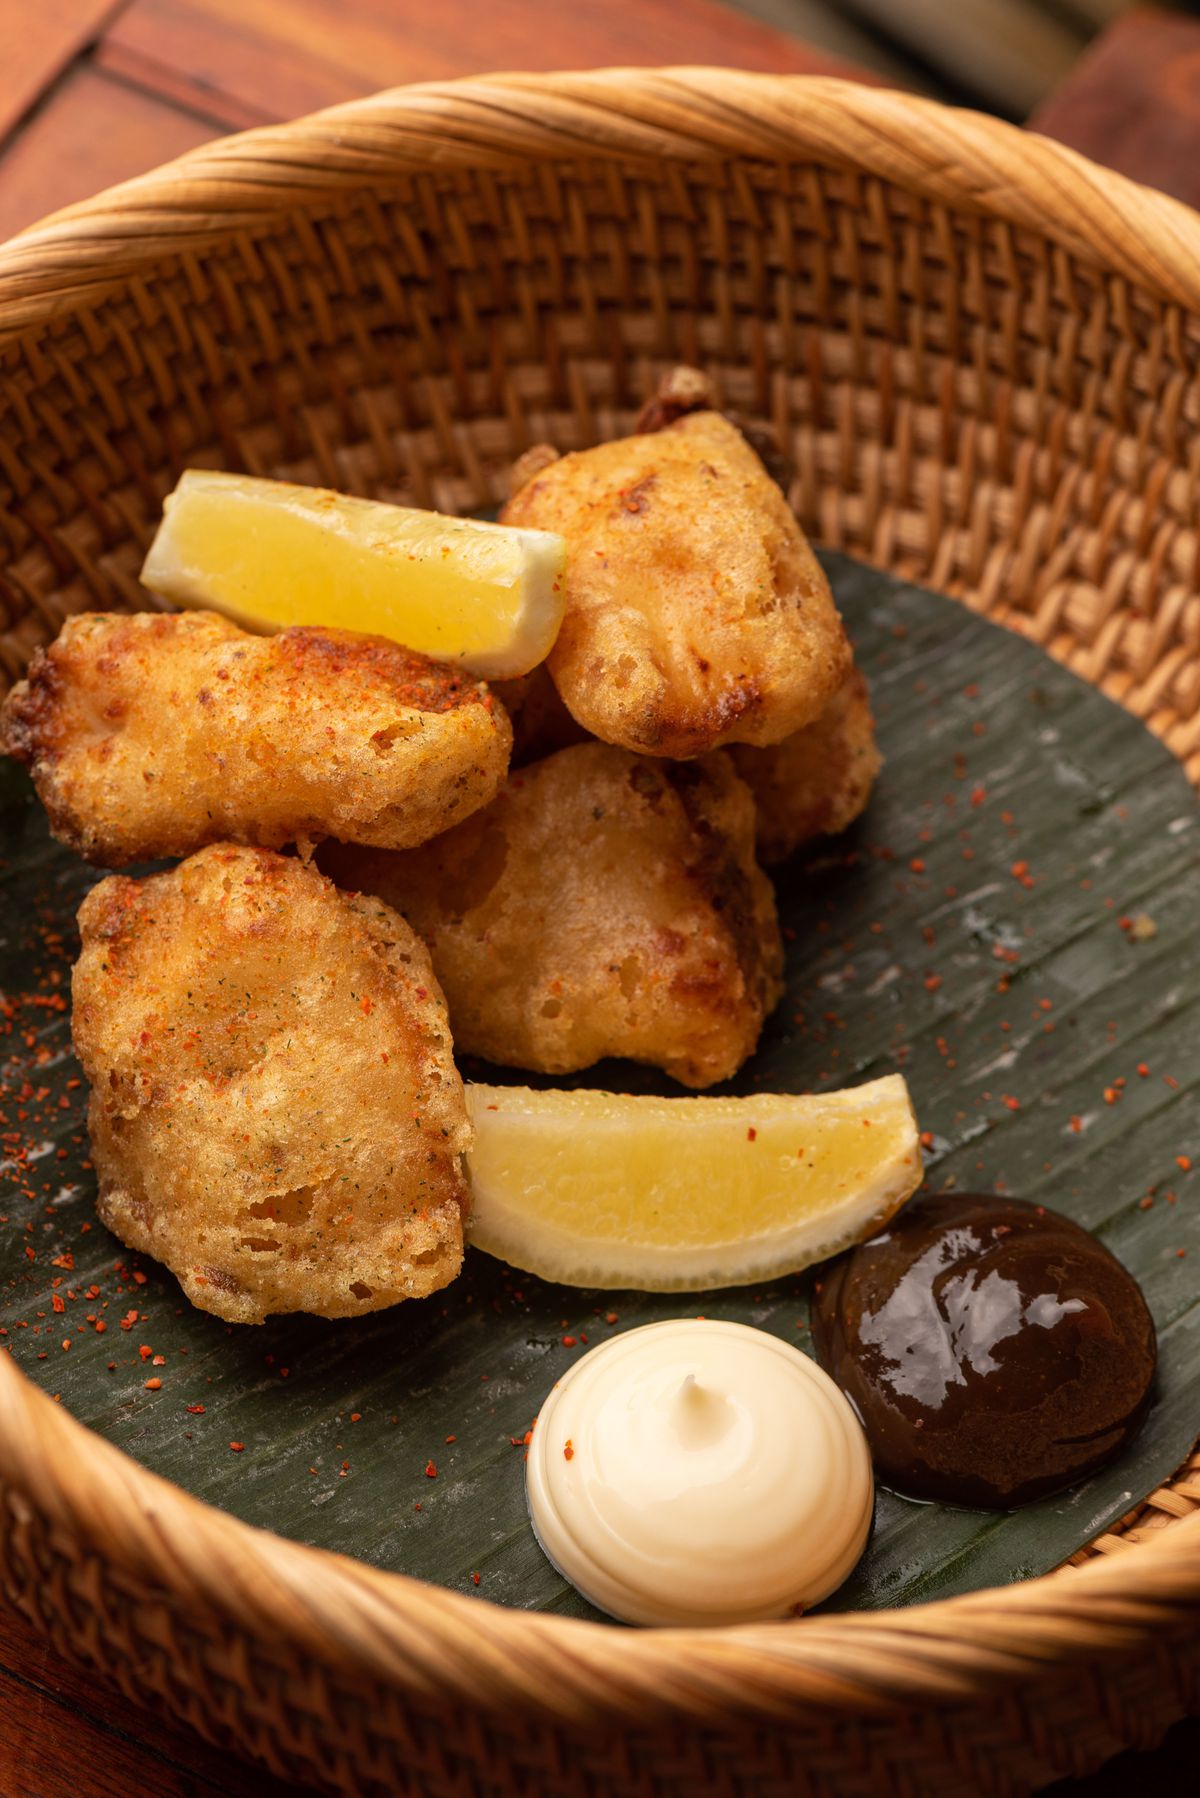 Mochiko chicken karaage nuggets with kewpie mayo and tonkatsu sauce over banana leaf in the wicker basket.